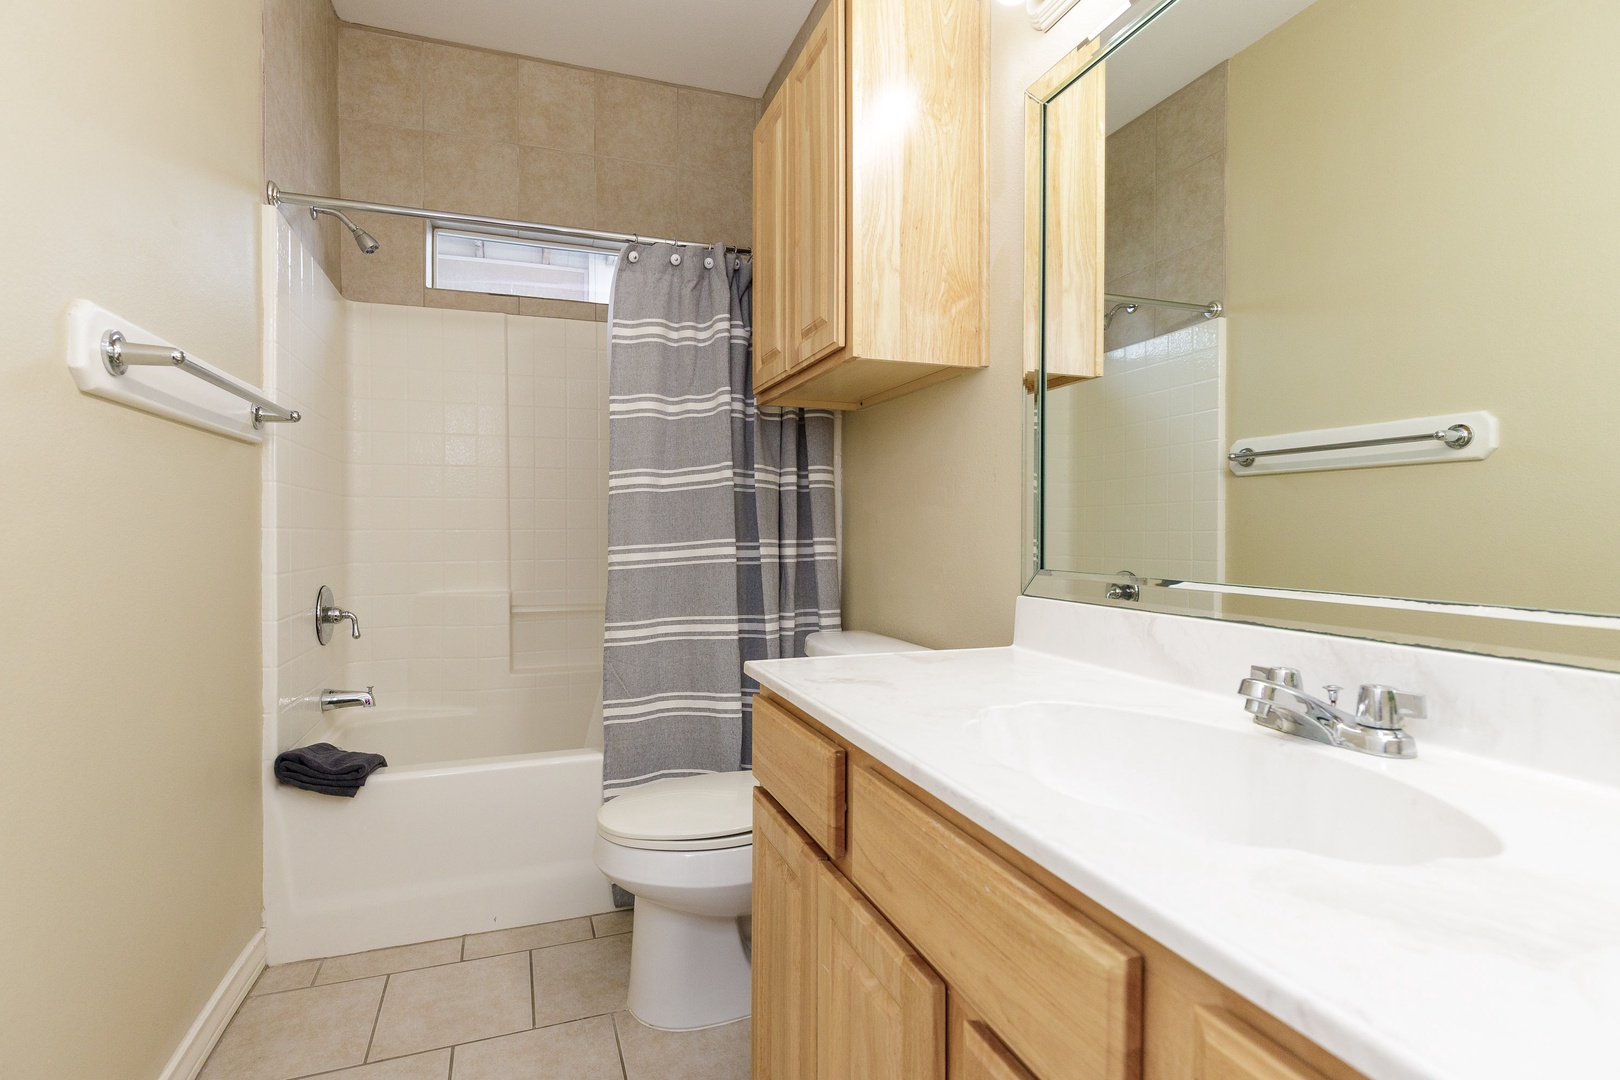 The 1st-floor en suite includes a large single vanity & shower/tub combo